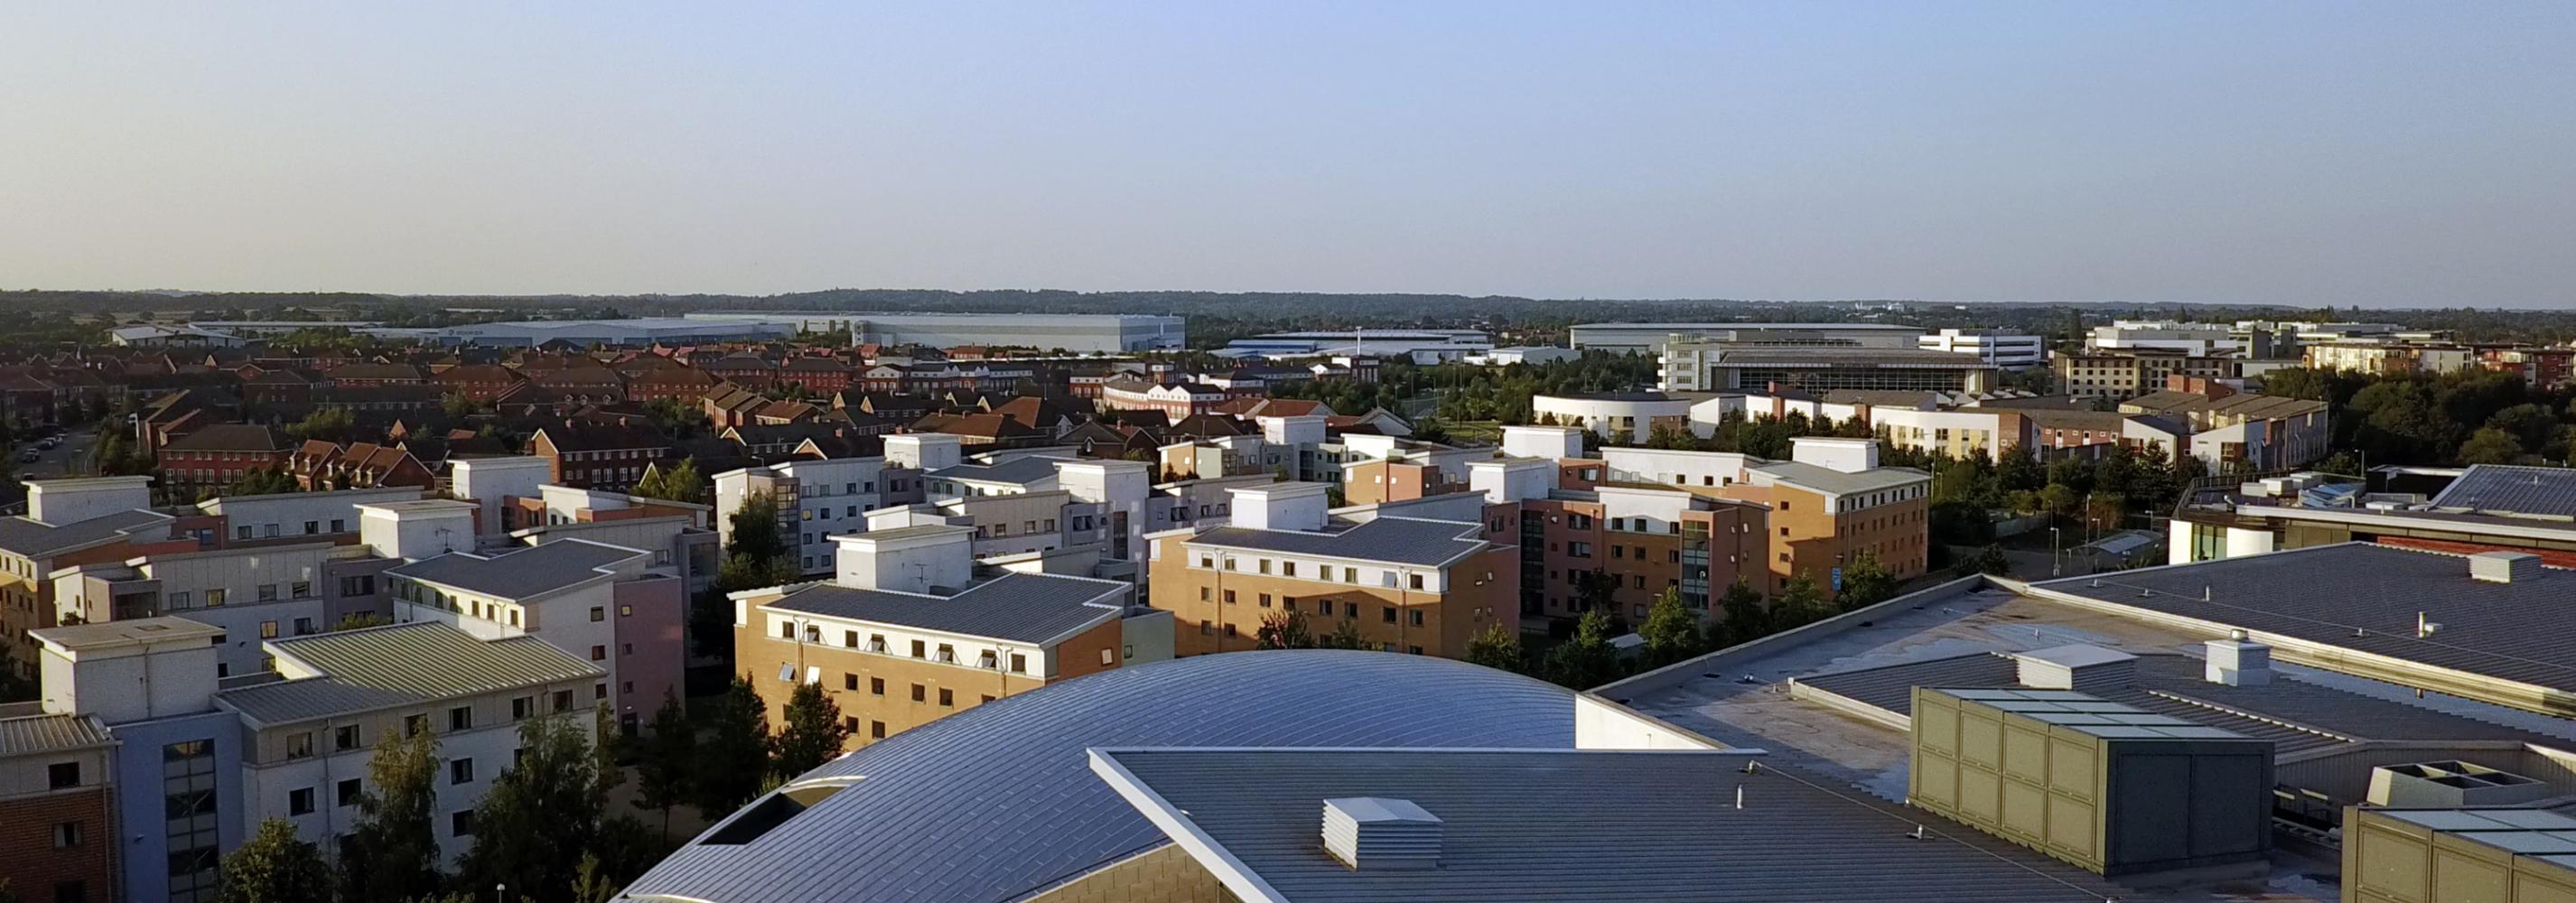 Aerial view of de Havilland campus accommodation